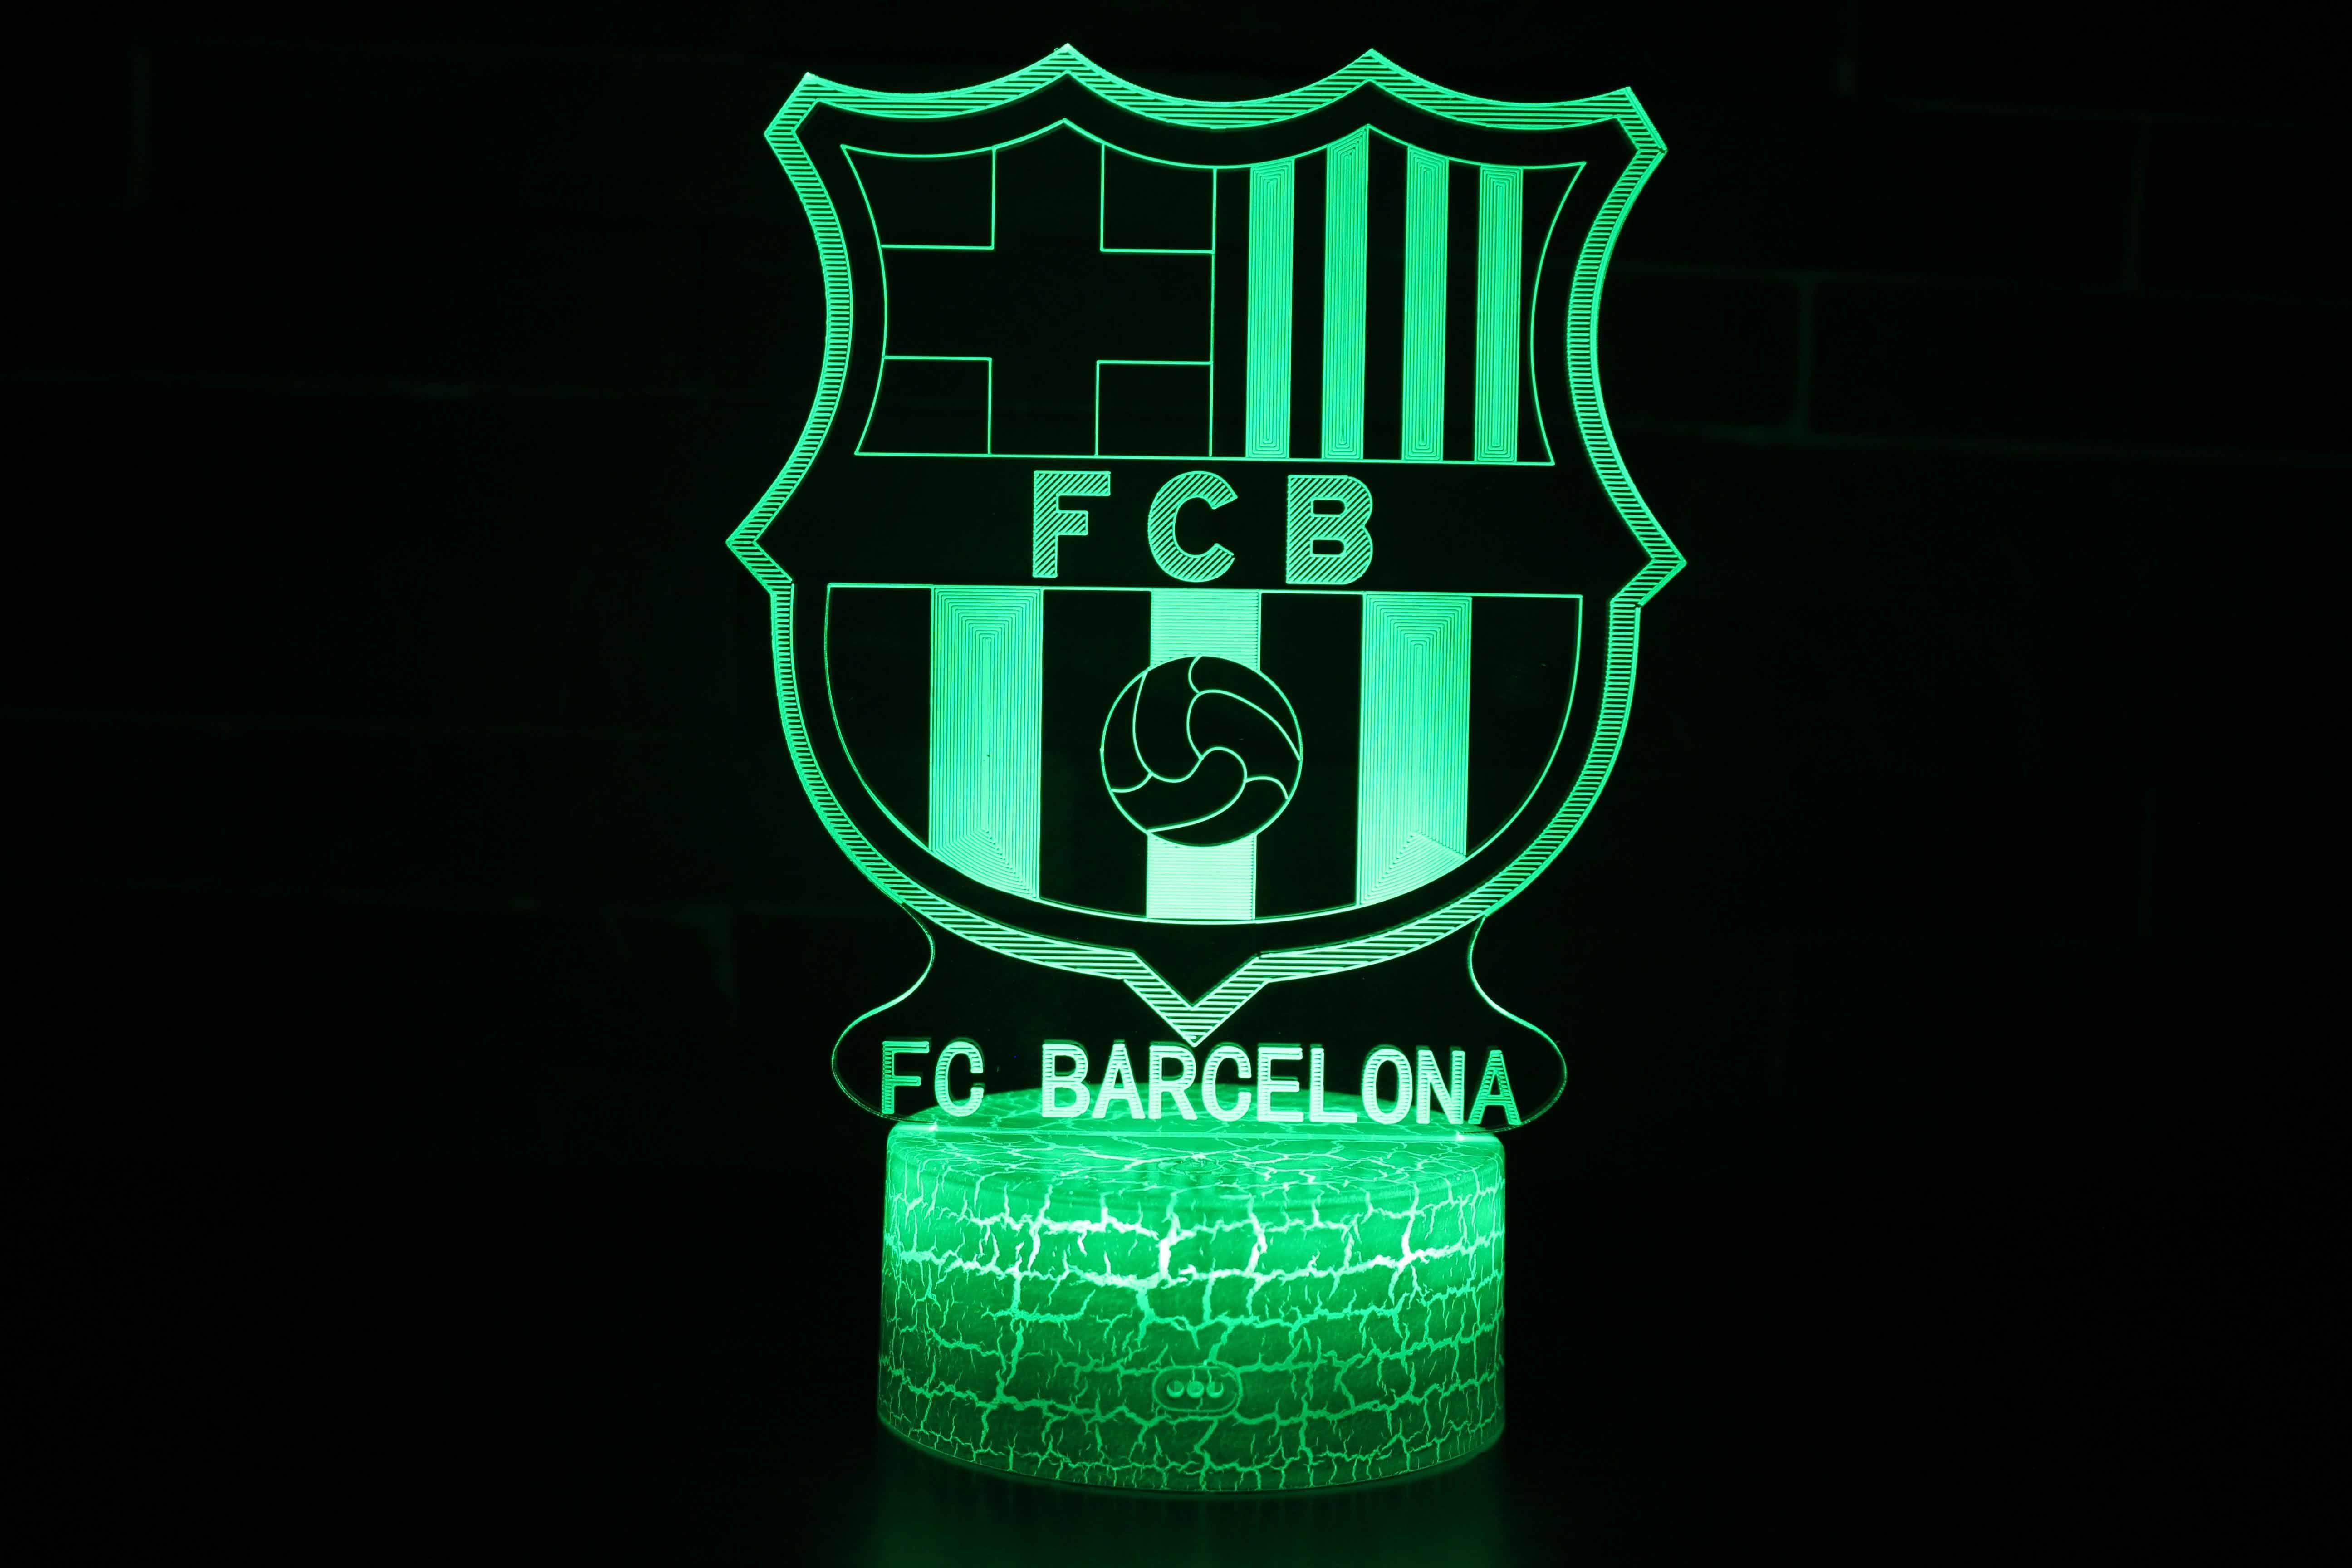 Lamp Logo - Details about FC Barcelona club Logo 3D illusion Night Light 7 Color LED  Desk Table Lamp Toys